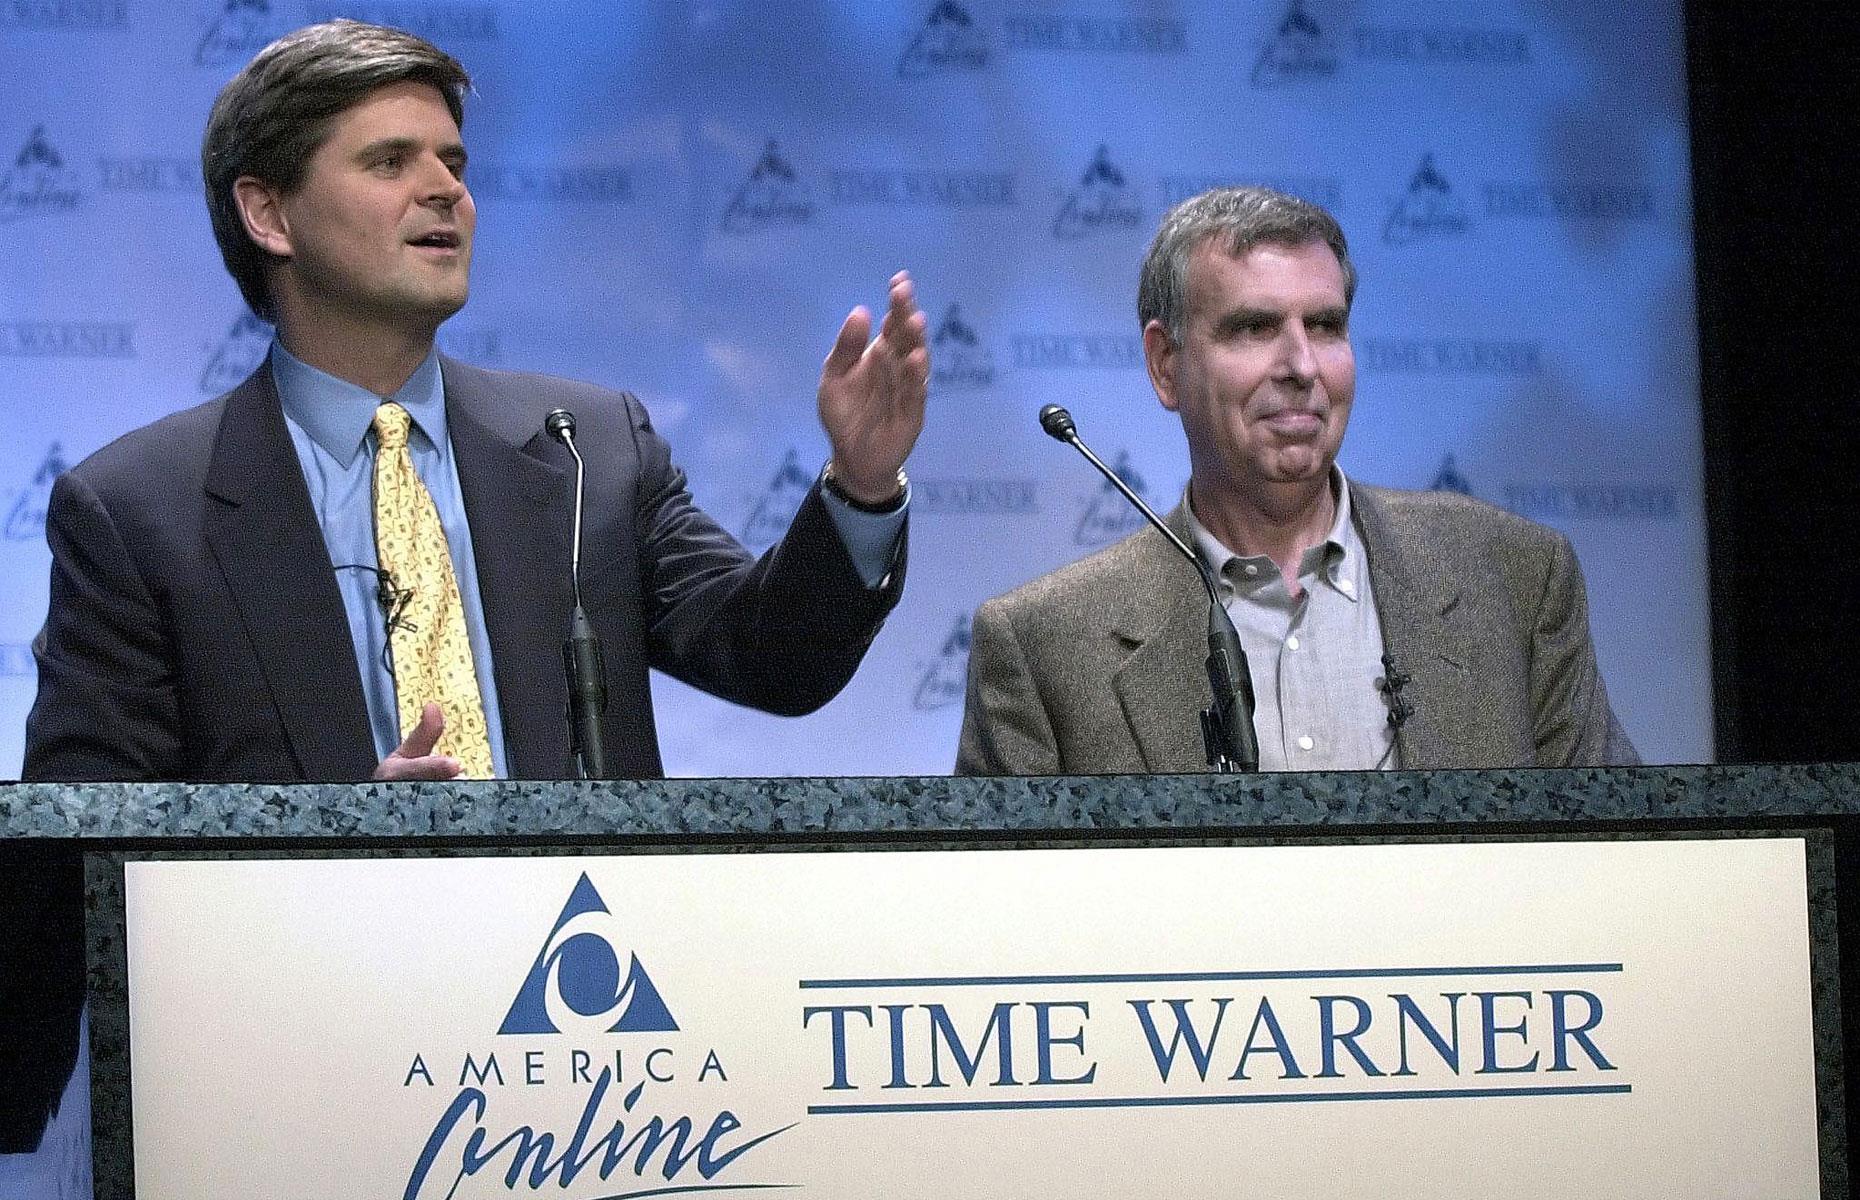 2. AOL & Time Warner in 2000: $240.07 billion (£179.84bn)